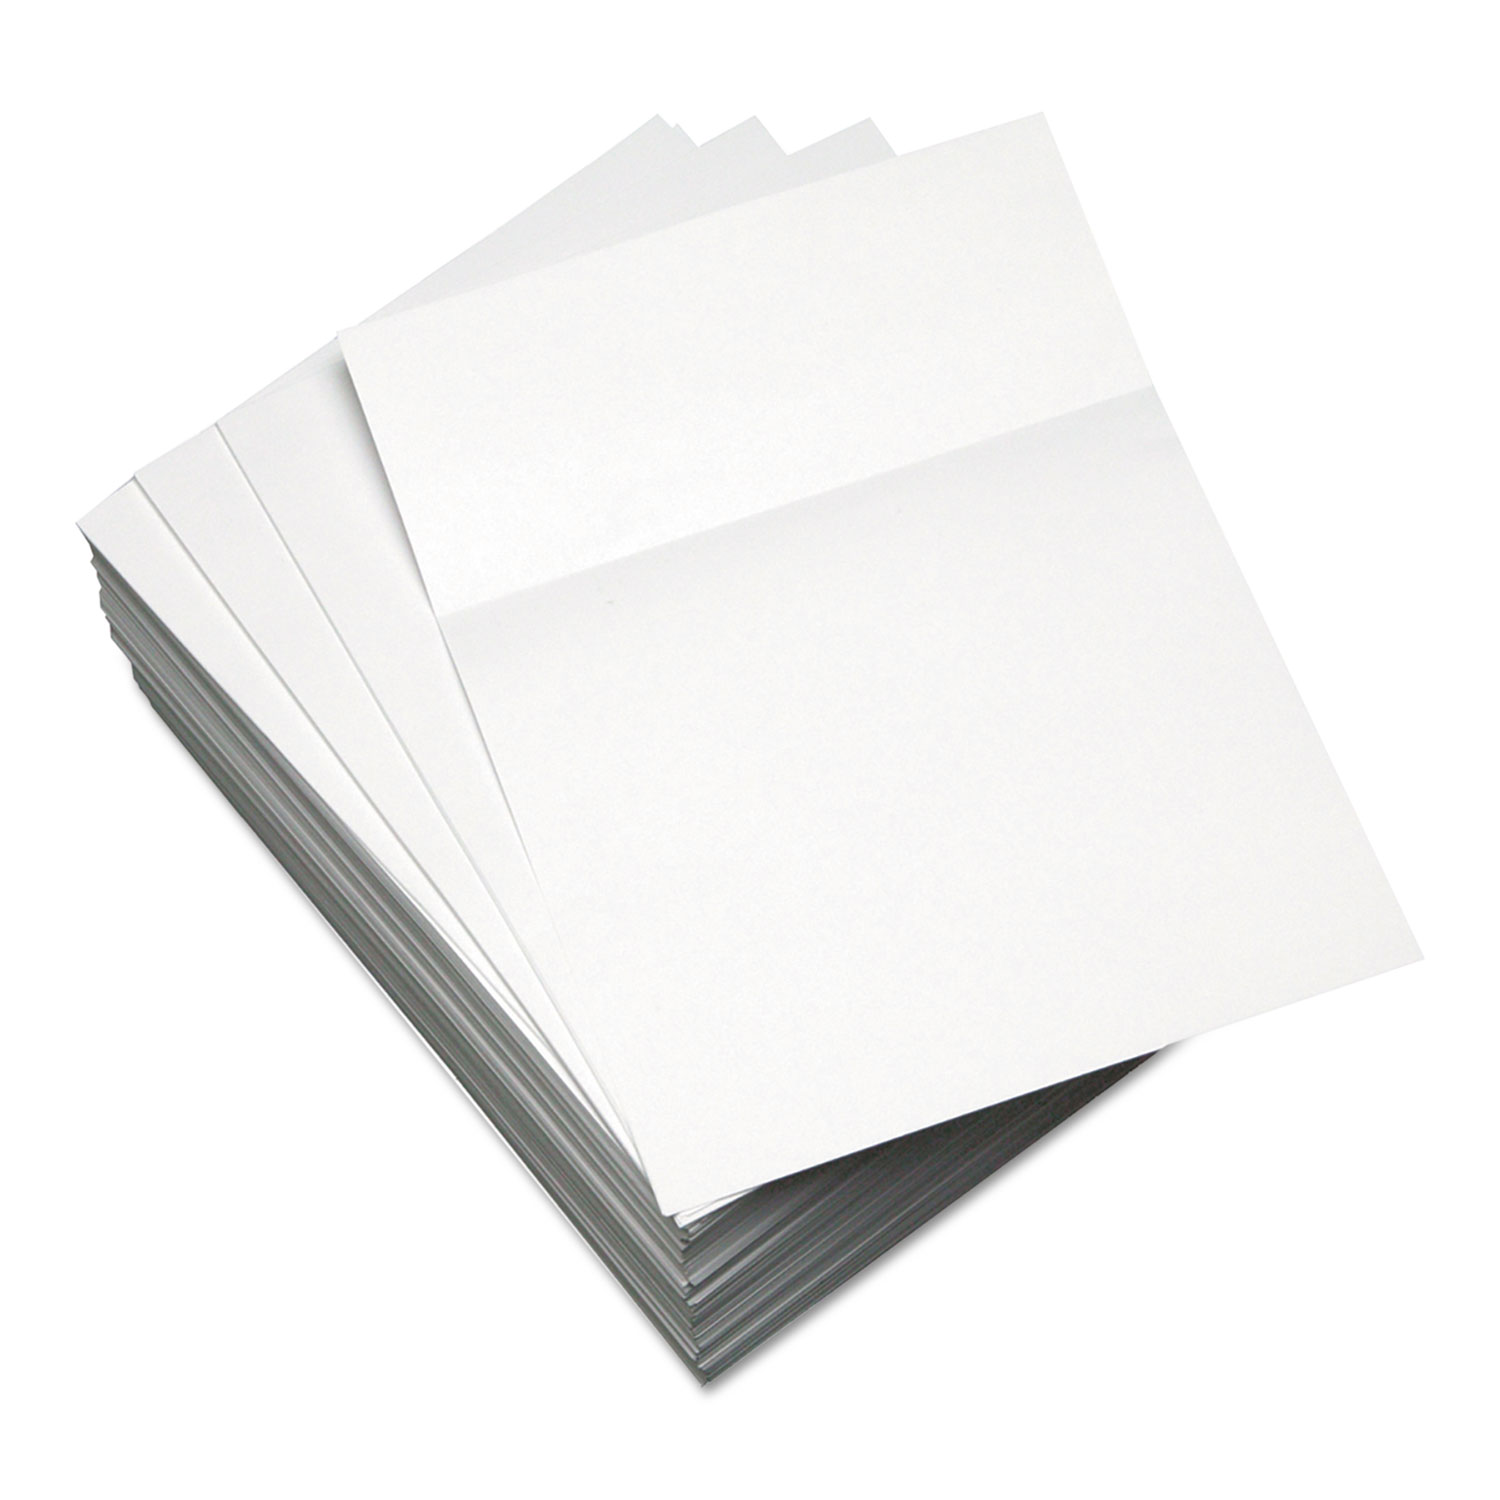  Domtar 851035 Custom Cut-Sheet Copy Paper, 92 Bright, 20lb, 8.5 x 11, White, 500/Ream (DMR851035) 